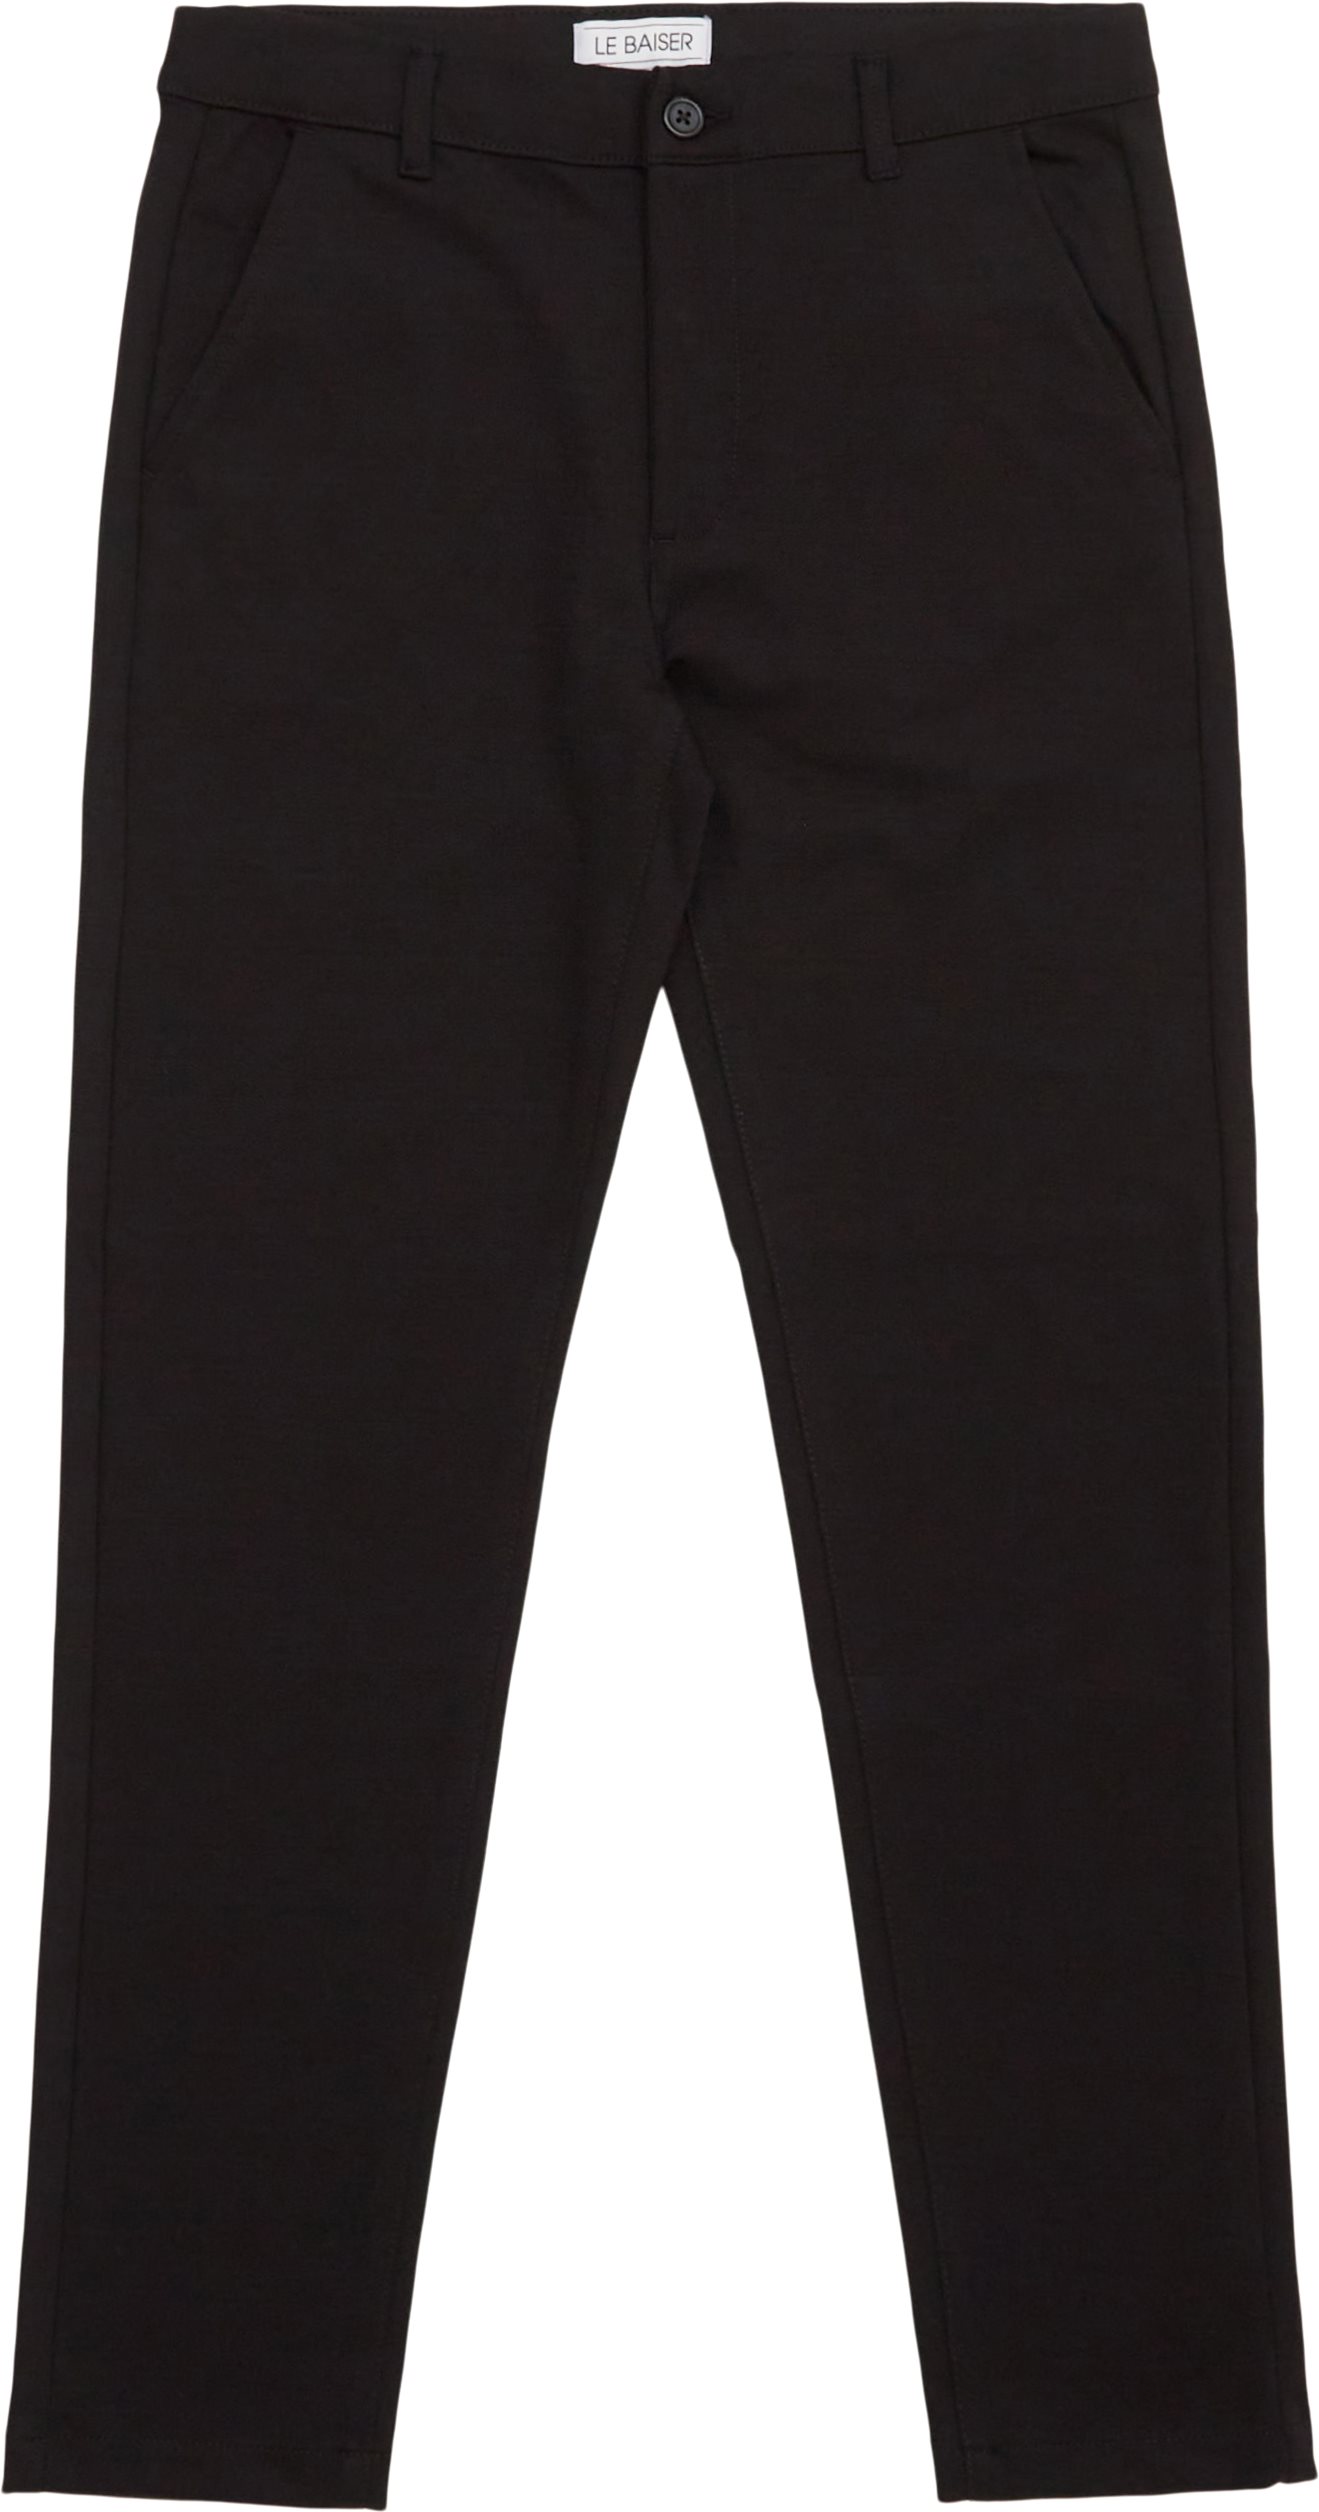 Avignon Pant - Trousers - Slim fit - Black